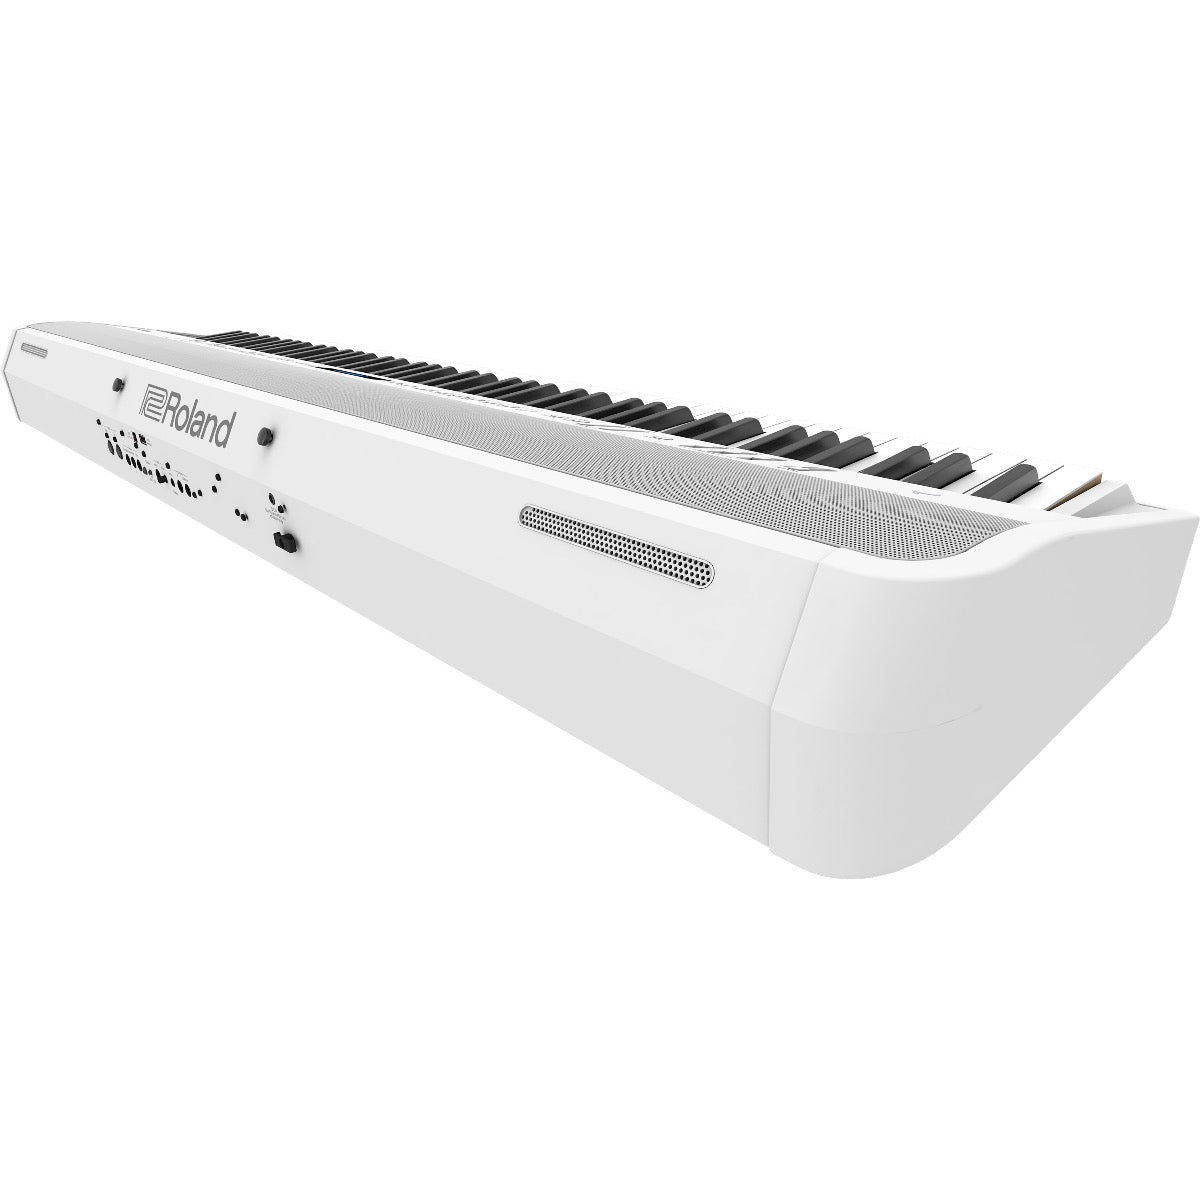 Roland FP-10 Digital Piano - Black BONUS PAK